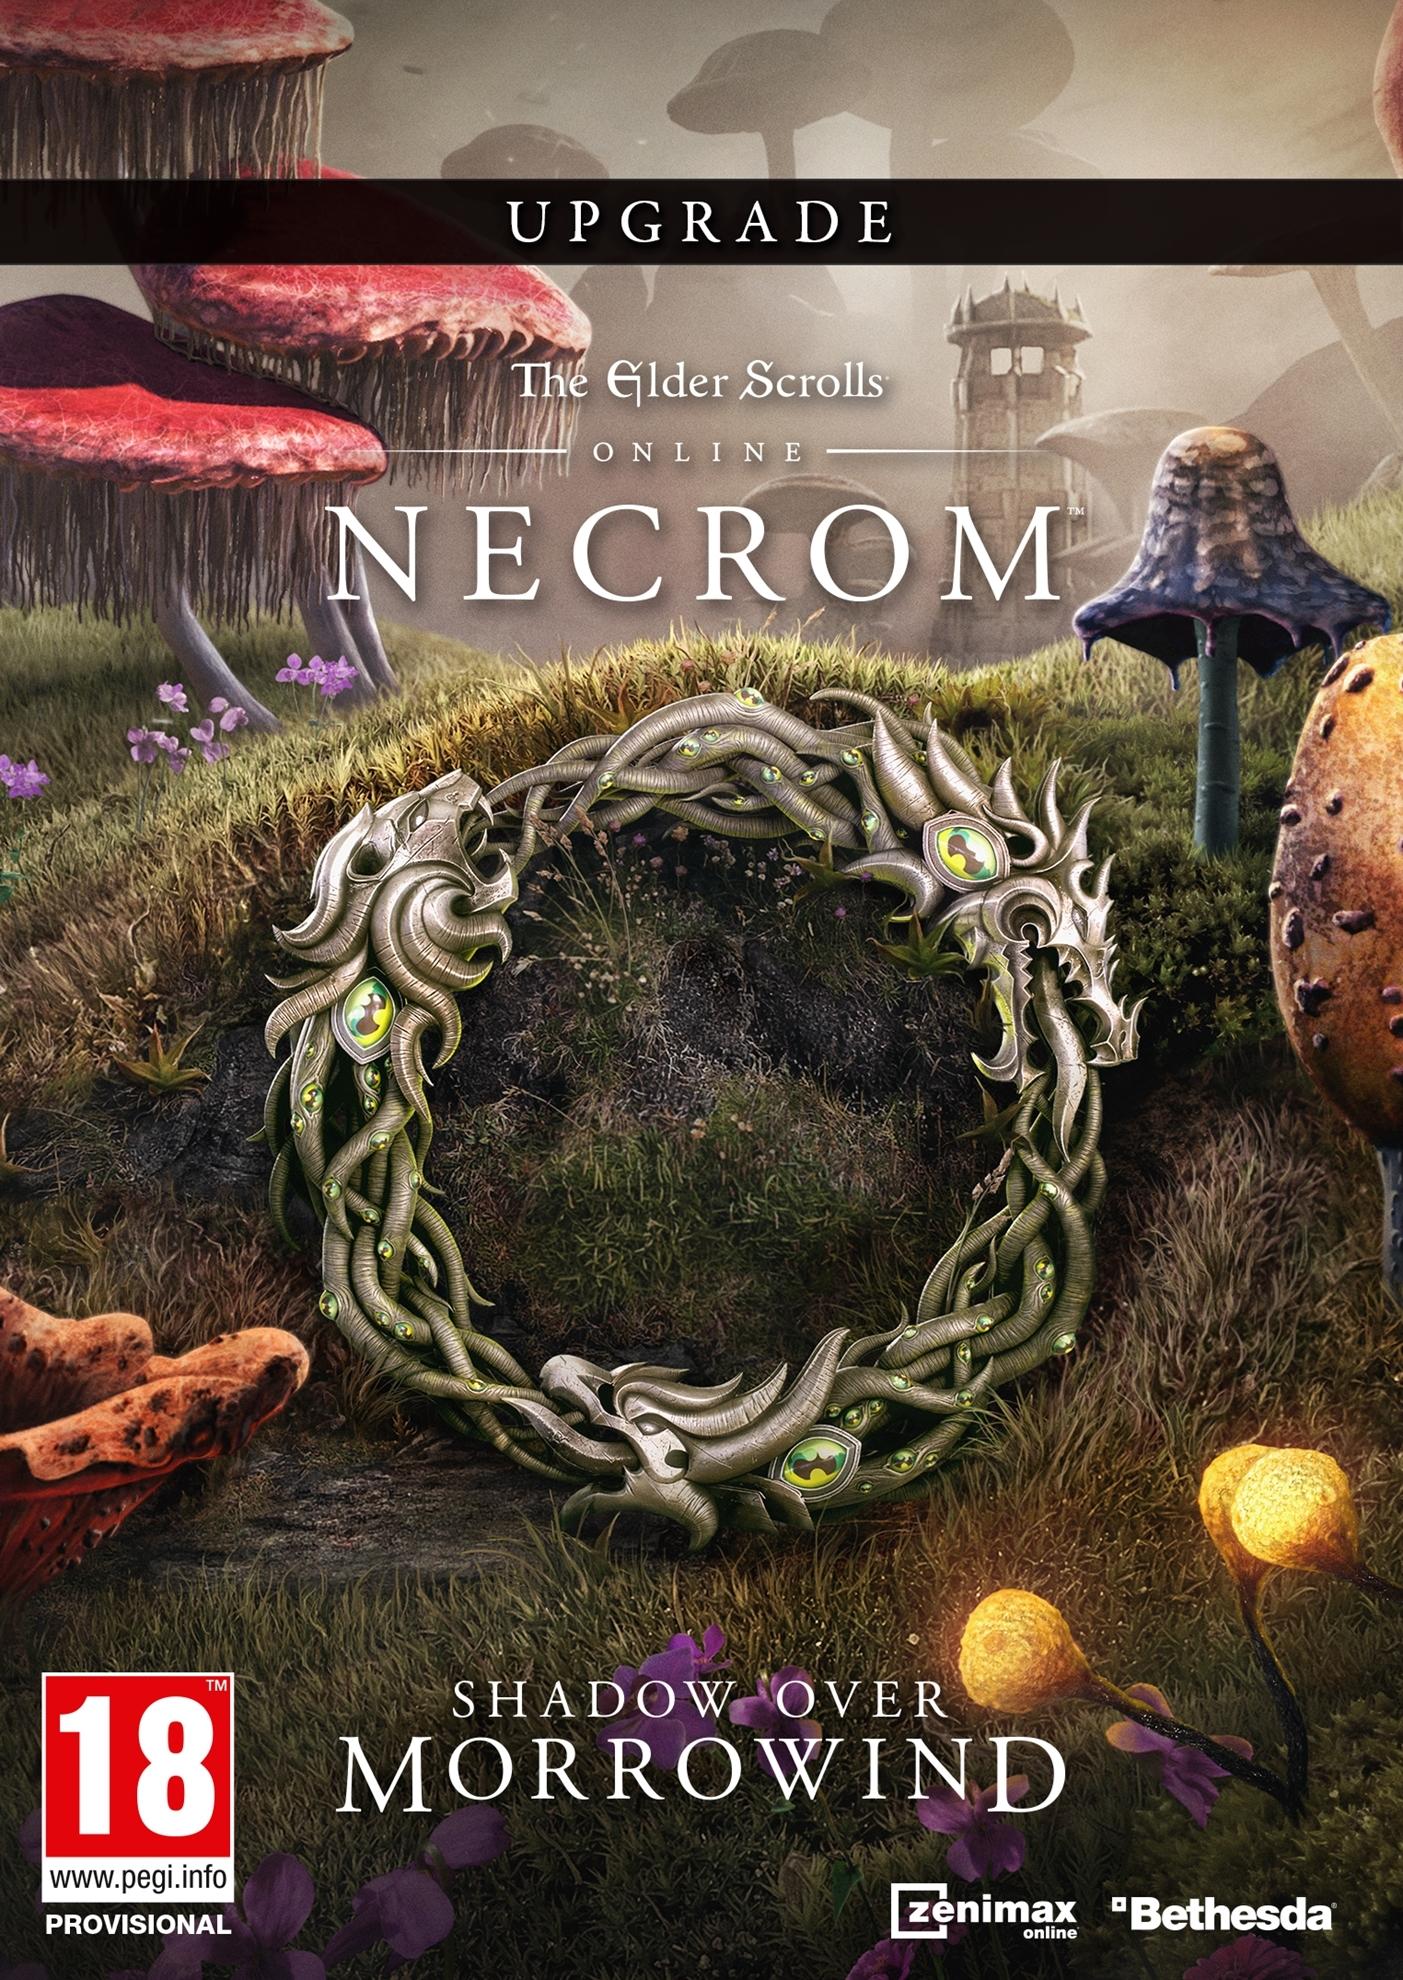 The Elder Scrolls Online Upgrade: Necrom Limited Time Offer Pre Order (Steam) | Region 2 (e0aeed64-5efa-410e-a2f3-6fb6e37e8254)